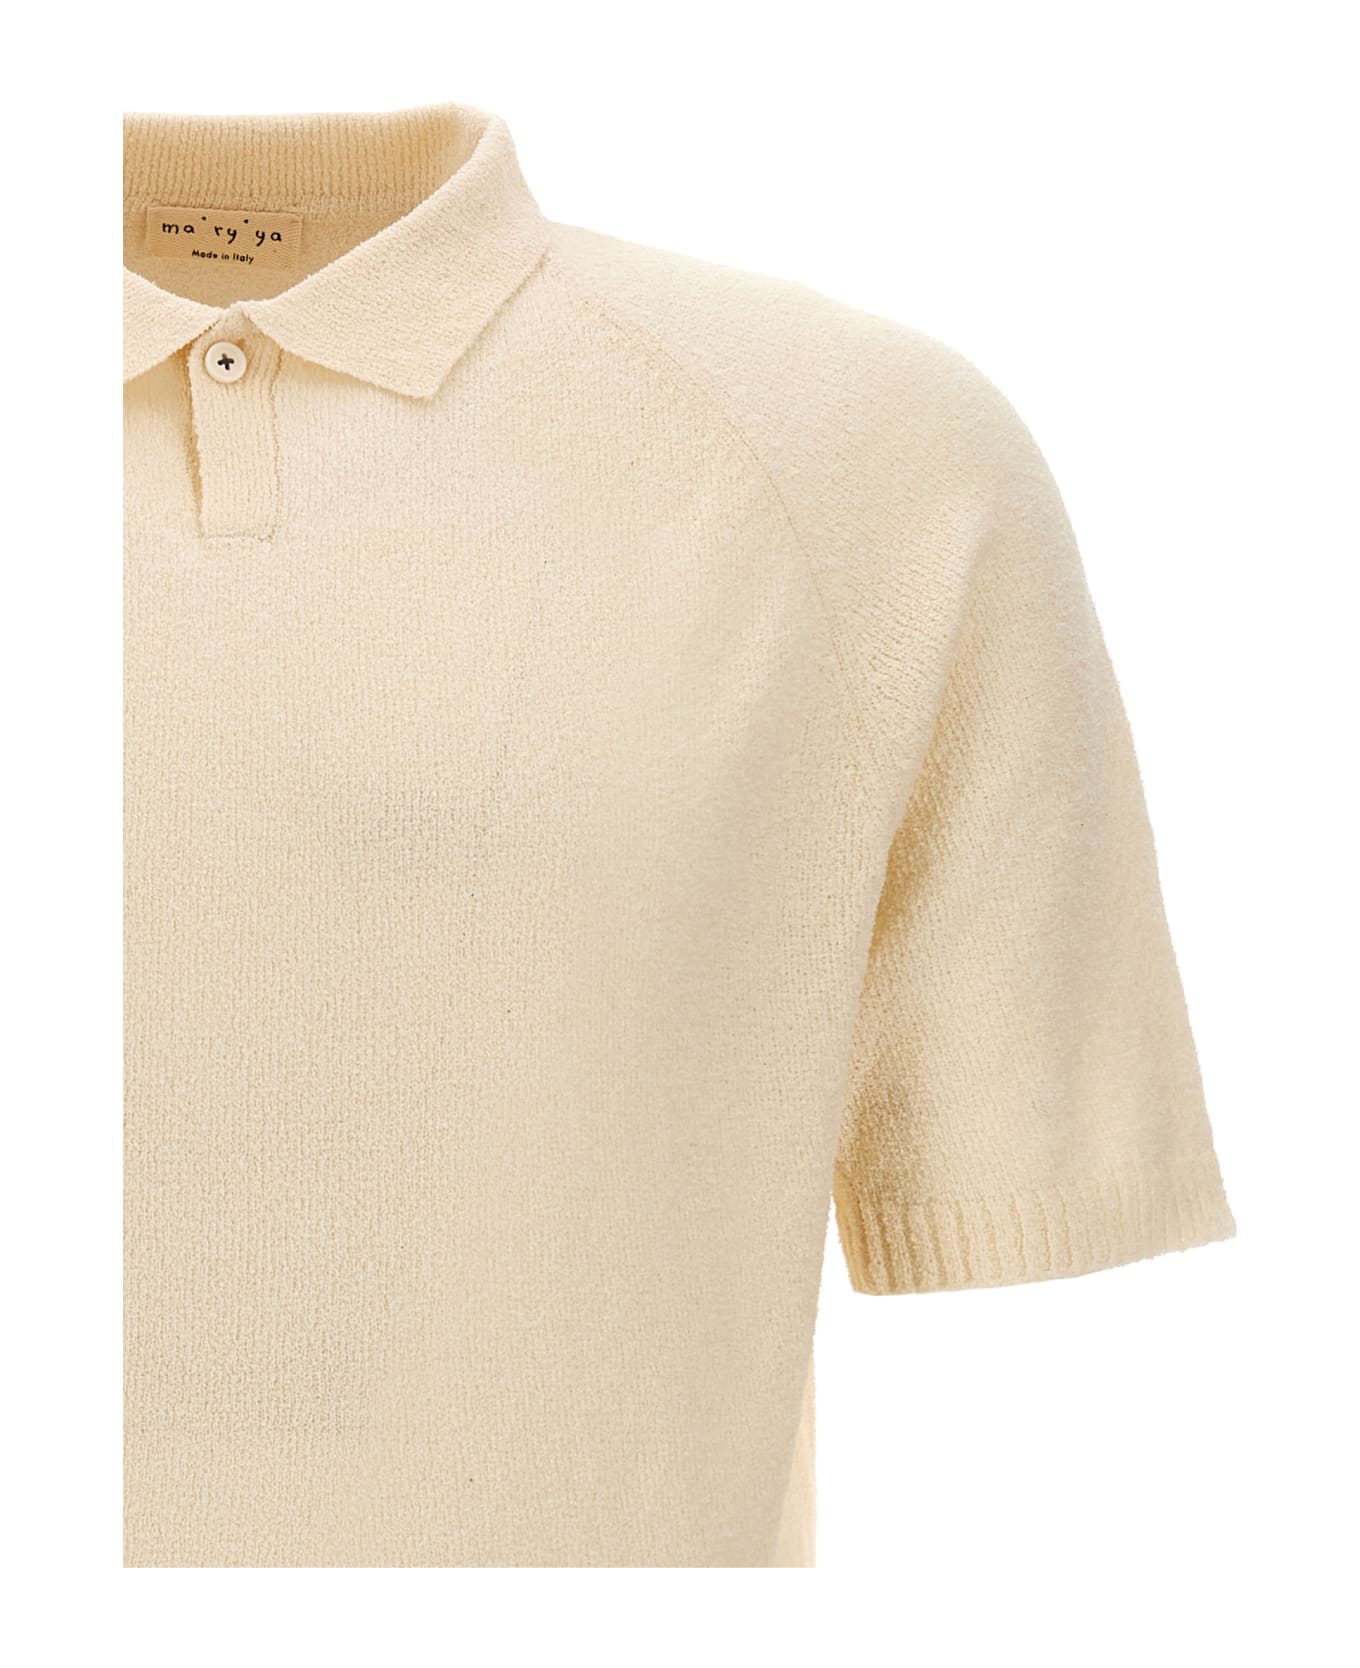 Ma'ry'ya Cotton Polo Shirt - White